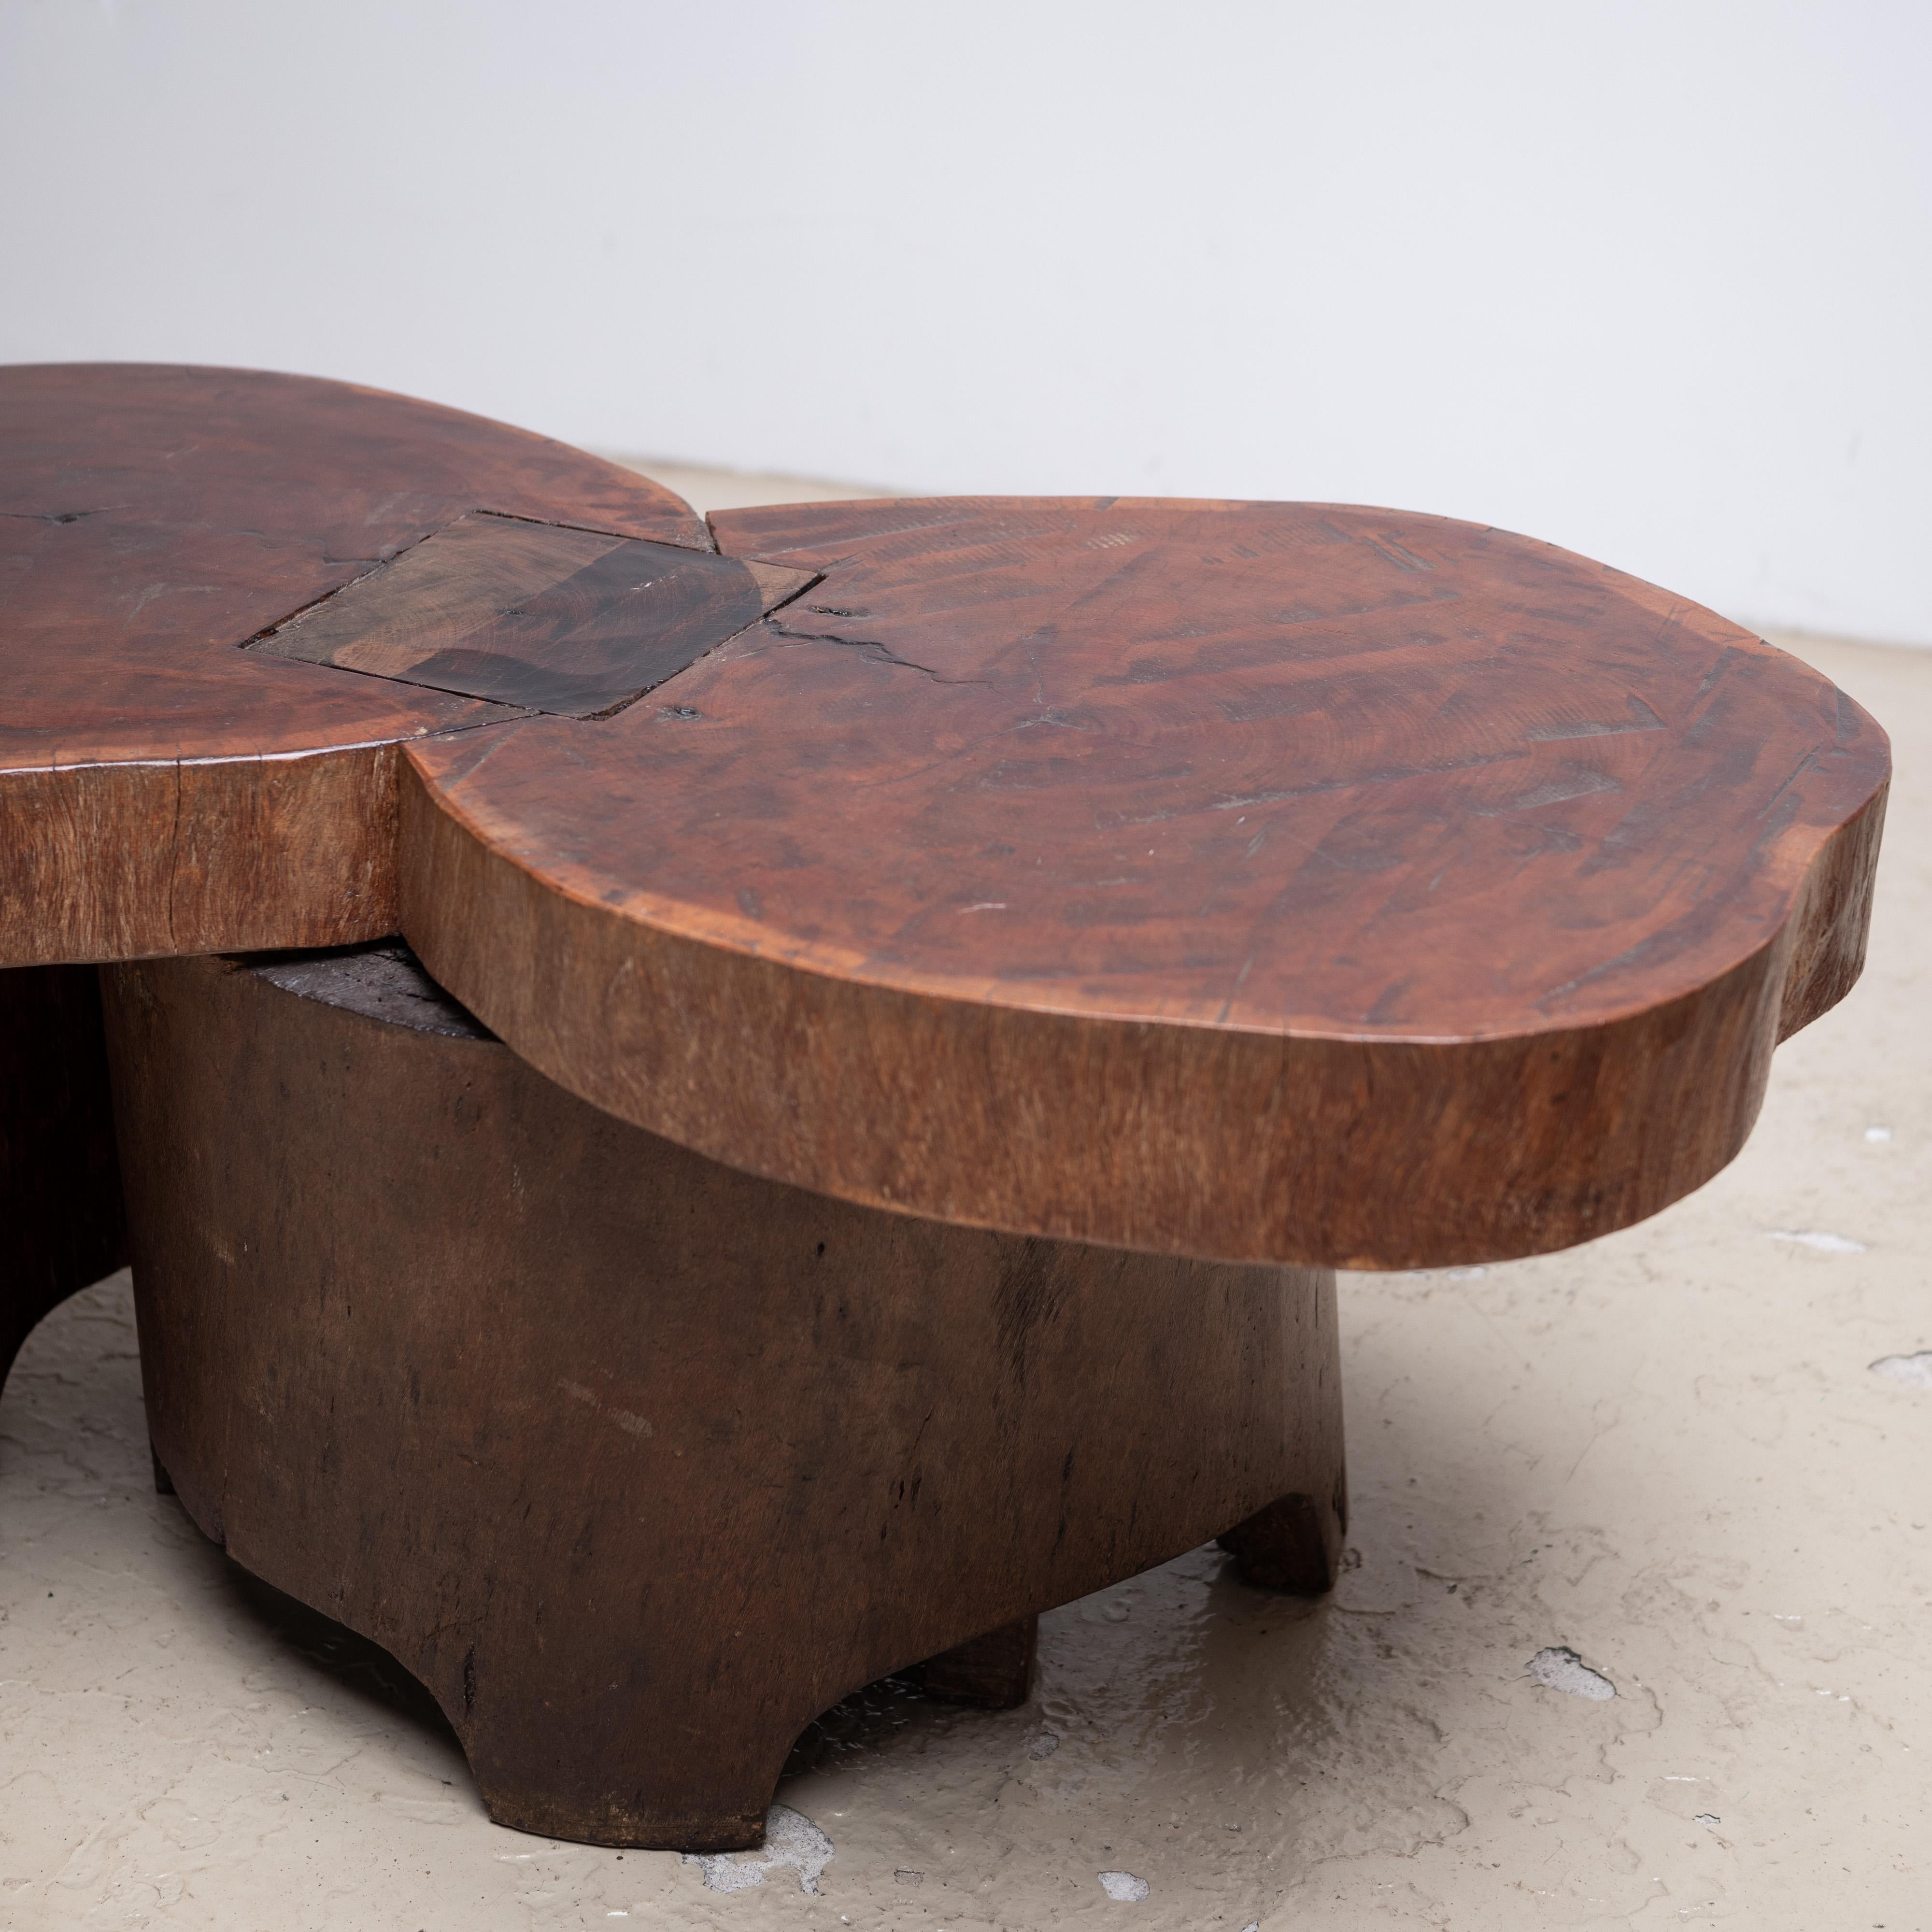 José Zanine Caldas Niedriger Tisch für Casa Nova Vicosa, Bahia, 1970er Jahre (Holz) im Angebot